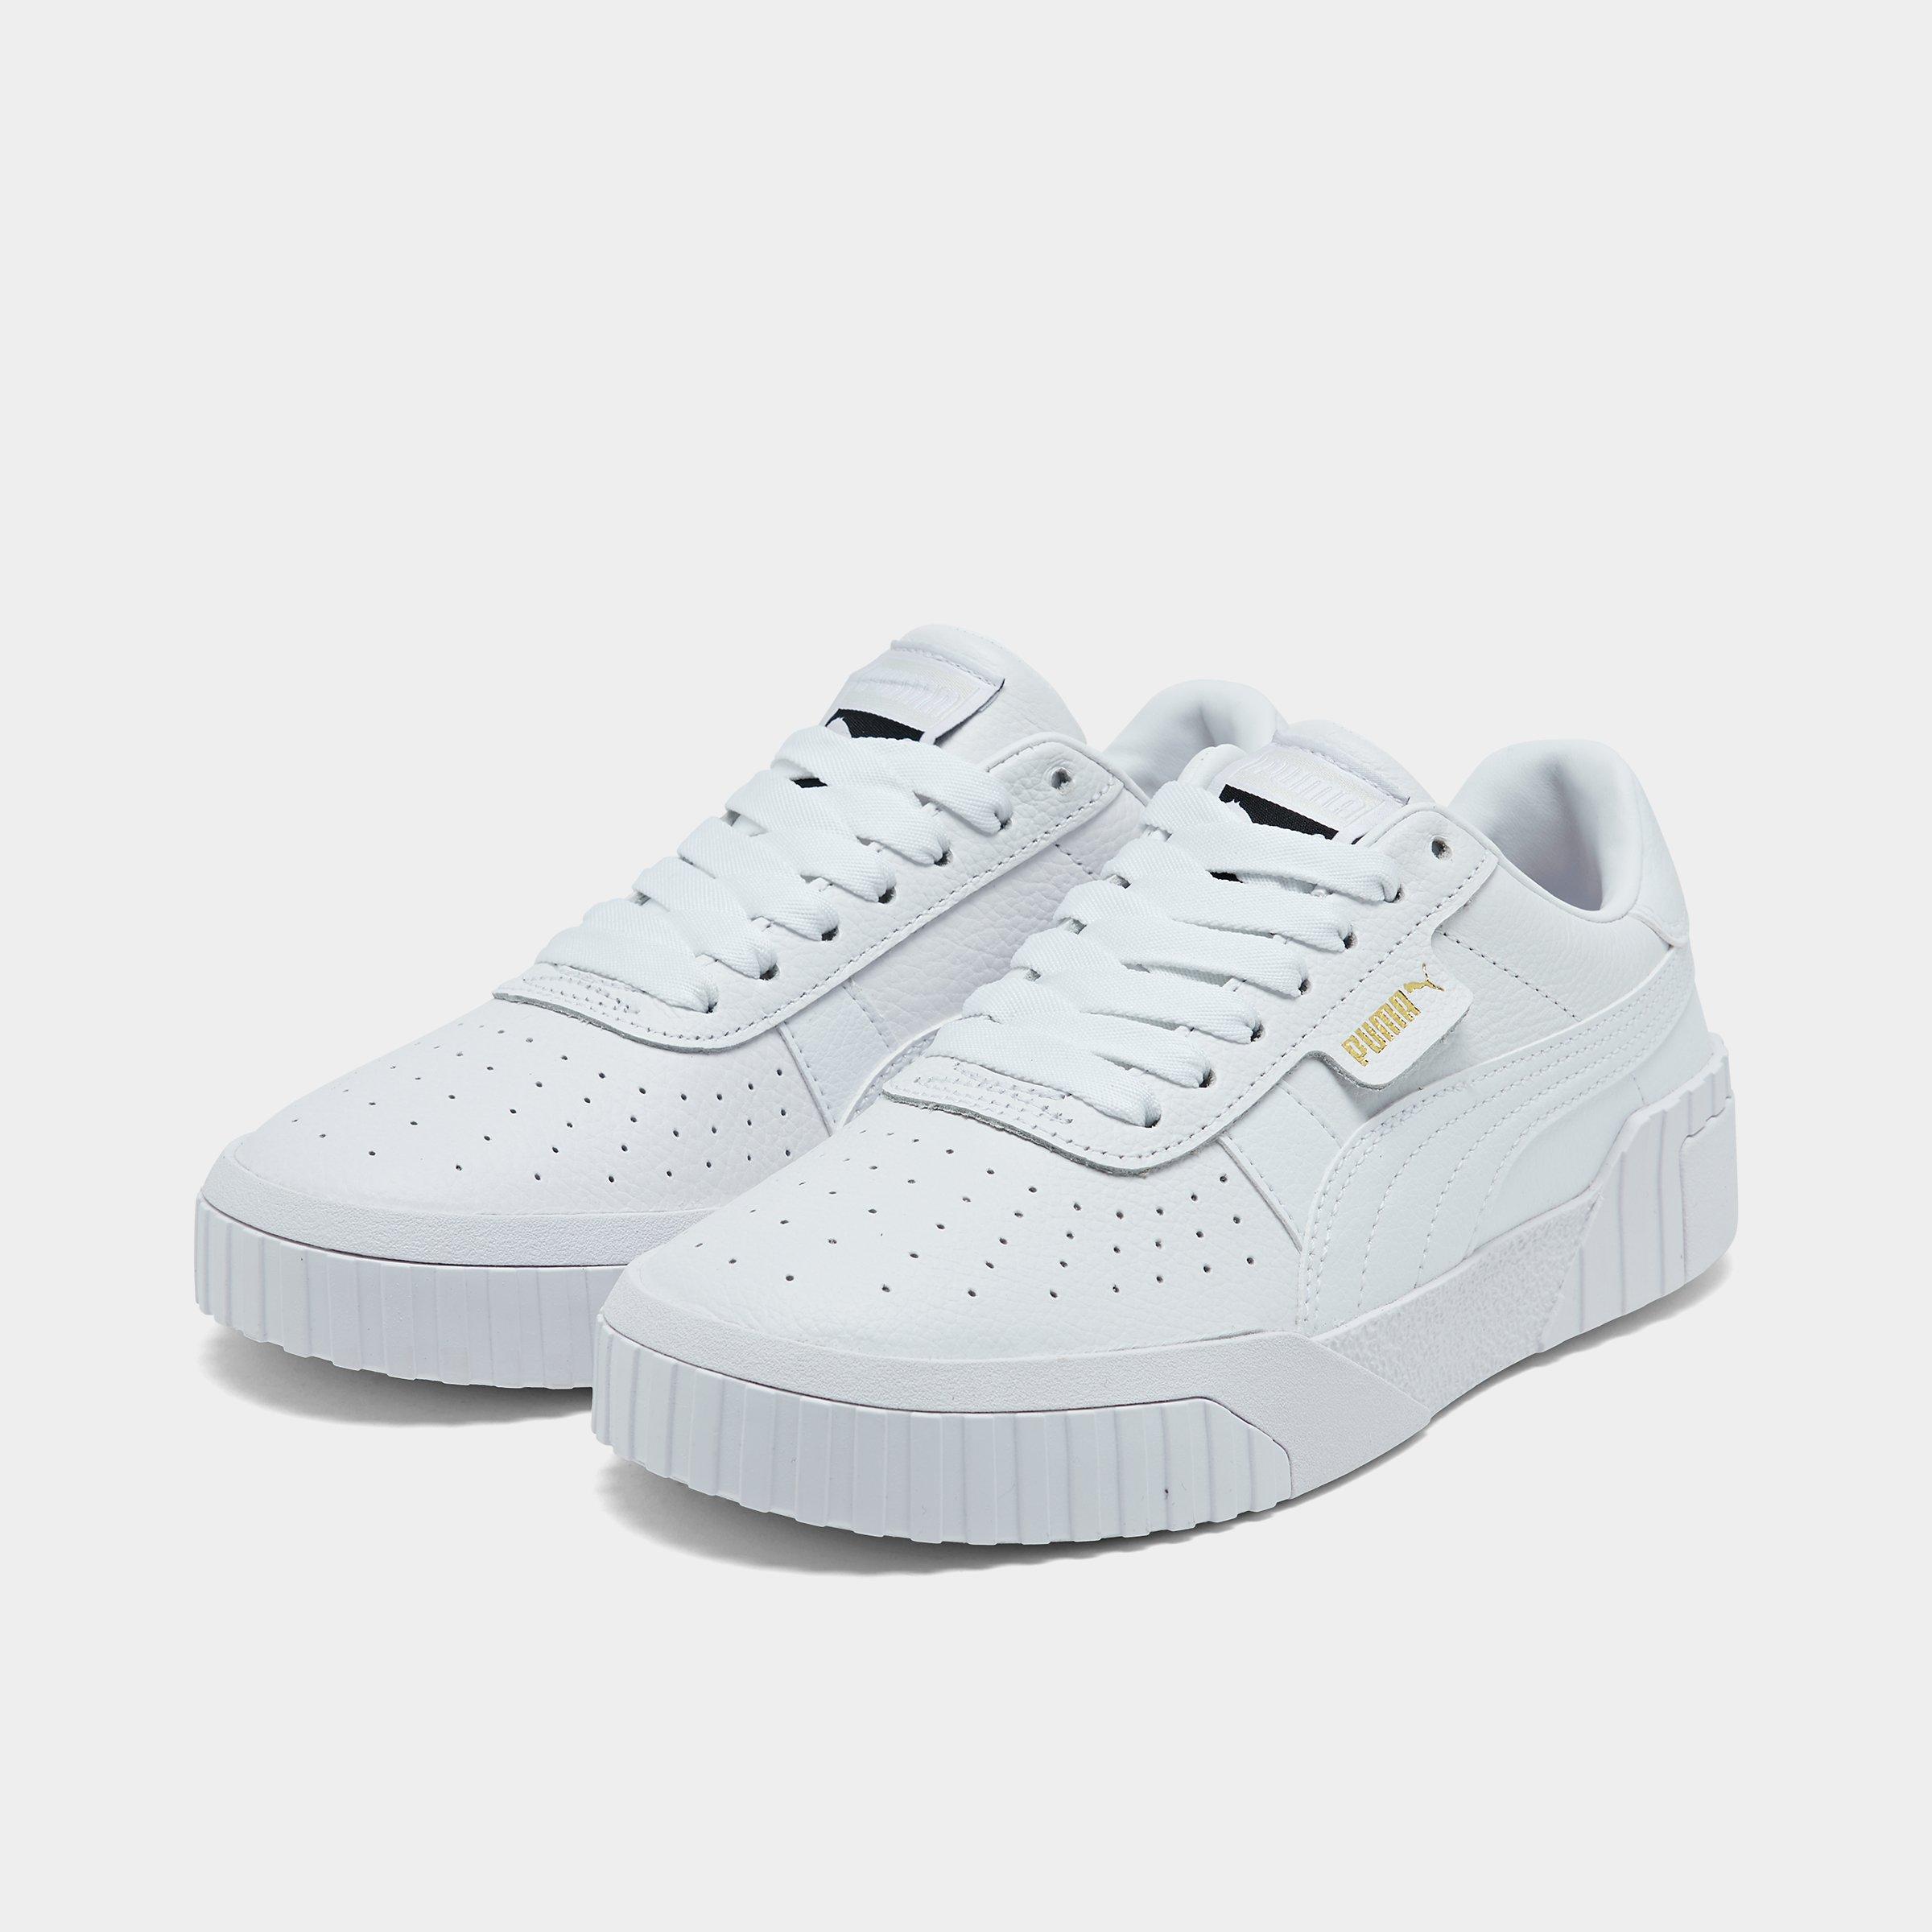 white puma shoes